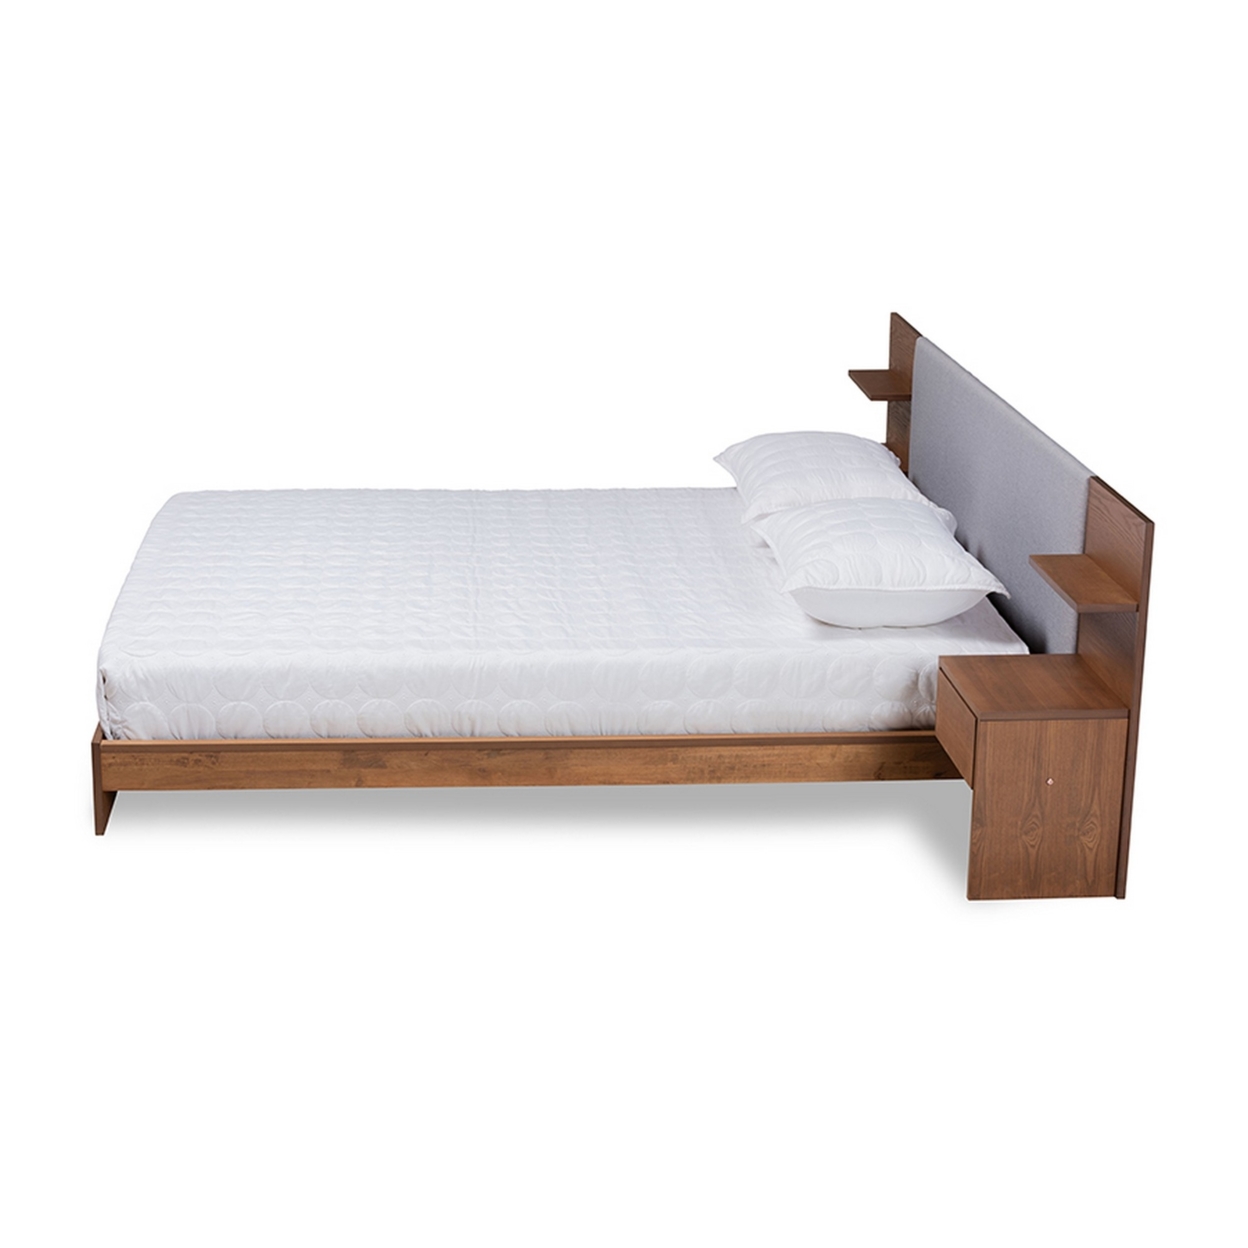 Sami Wood Queen Size Platform Storage Bed with Built-In Nightstands - image 3 of 5